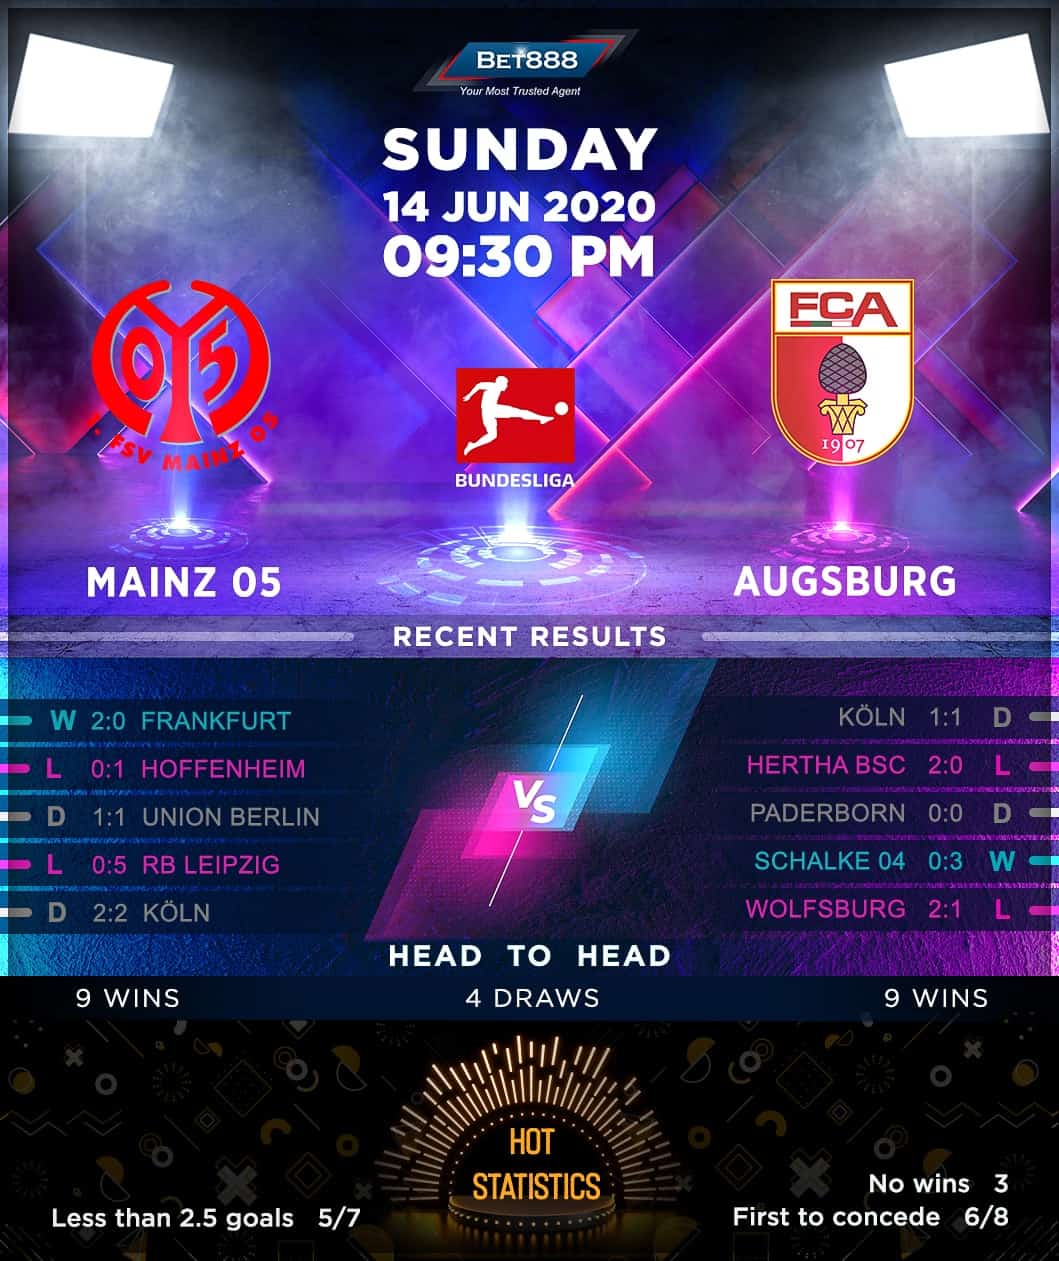 Mainz vs Augsburg 14/06/20